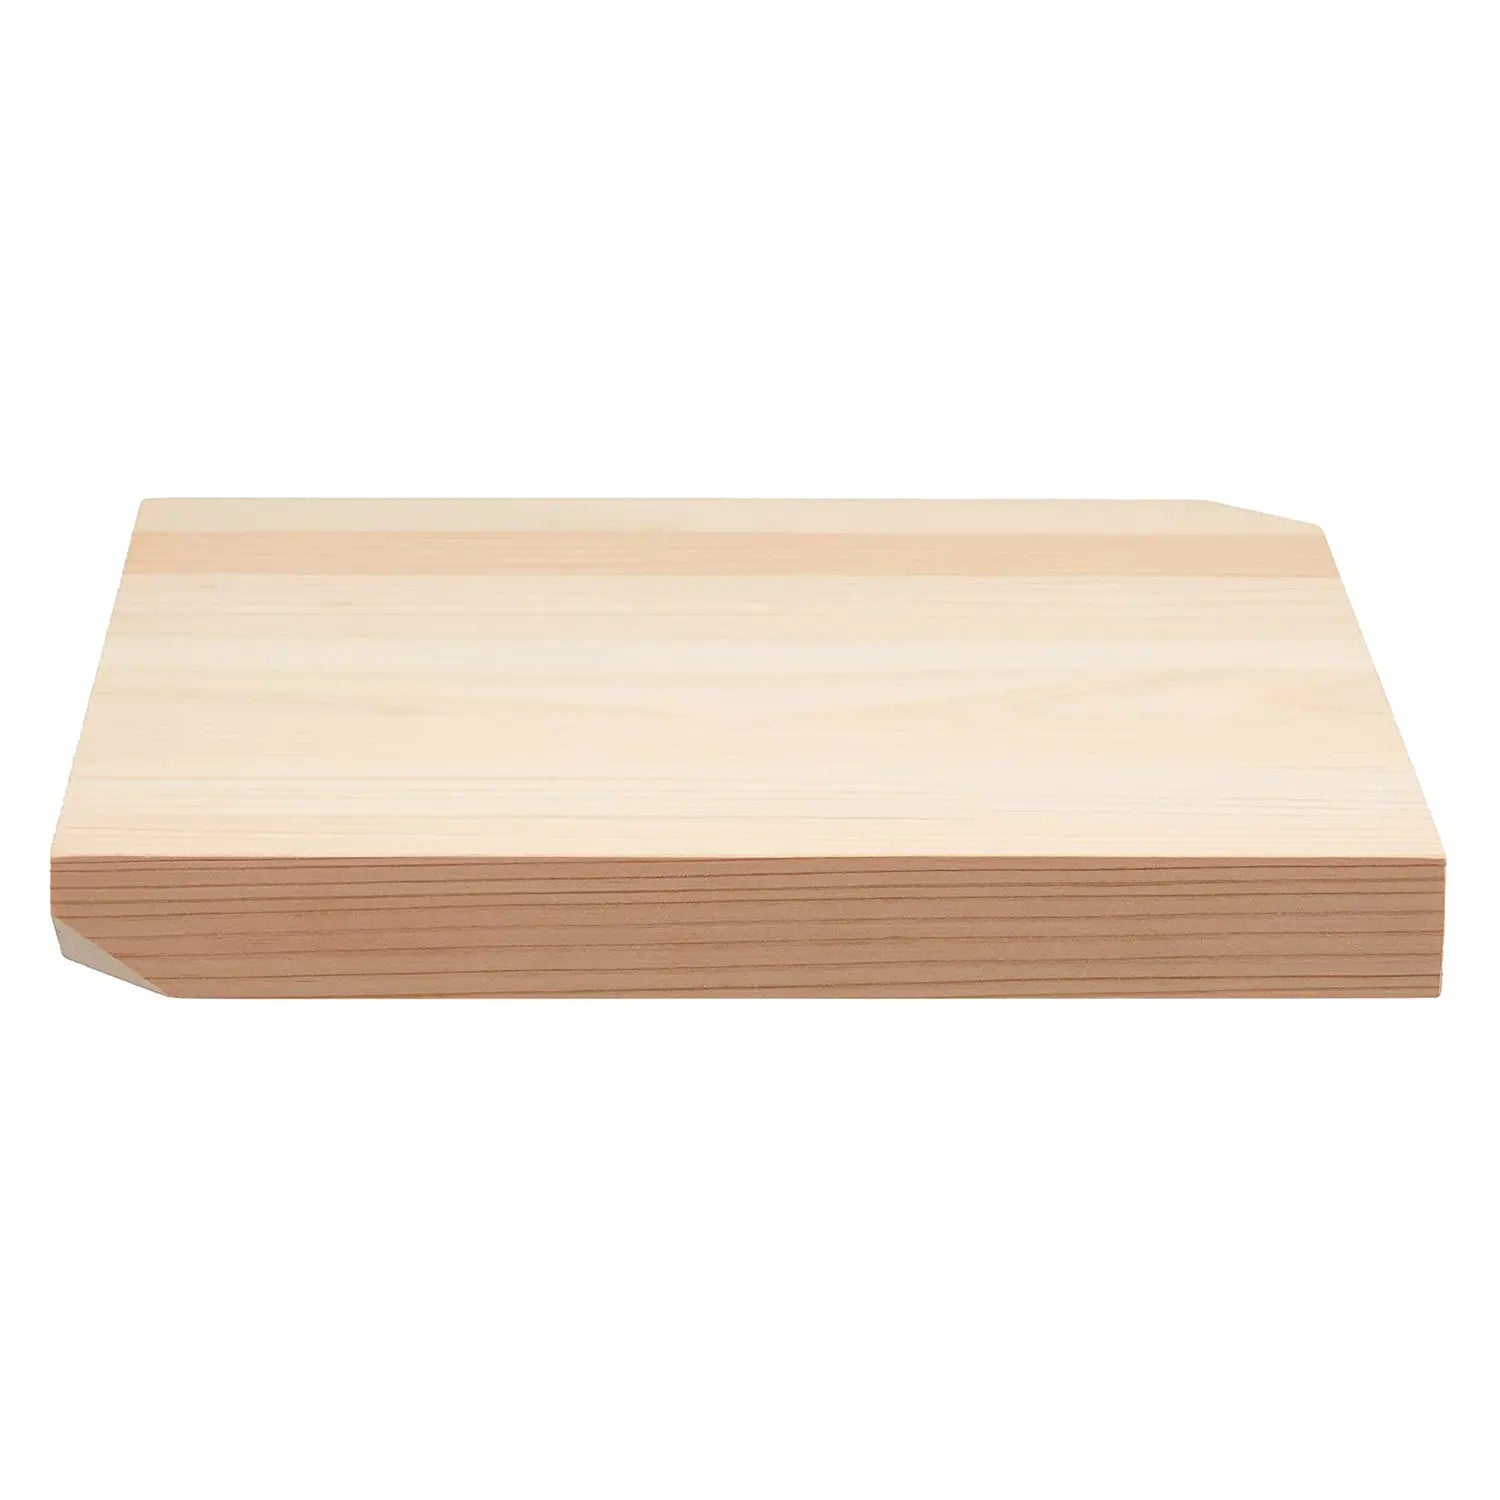 Gingko Wood Cutting Board S by Yamacoh